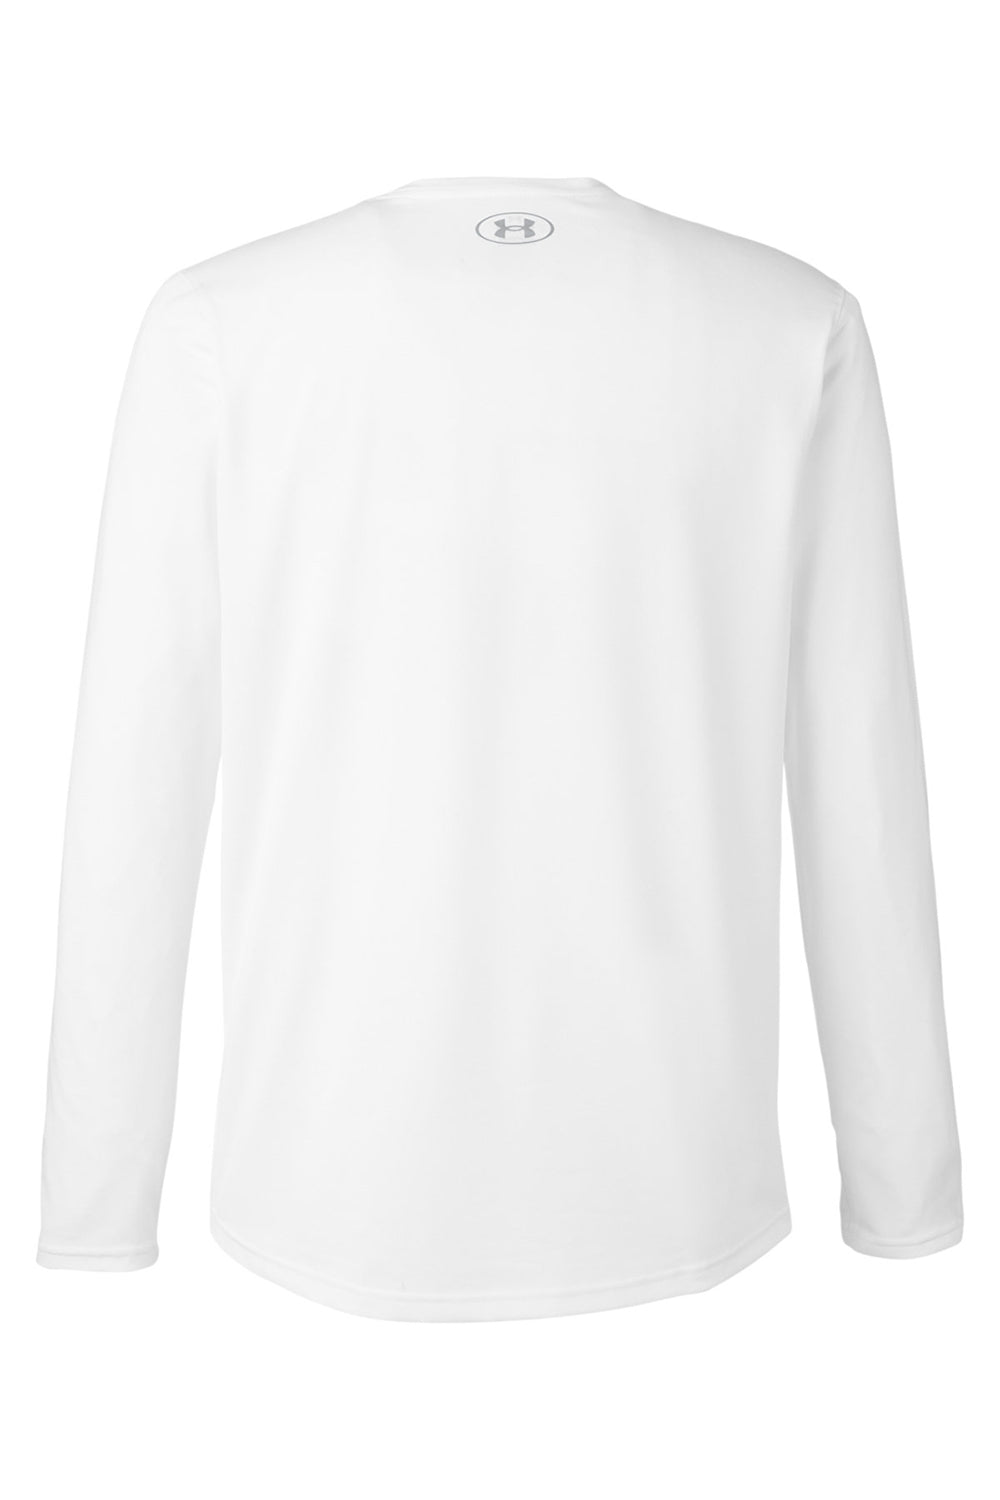 Under Armour 1376843 Mens Team Tech Moisture Wicking Long Sleeve Crewneck T-Shirt White Flat Back